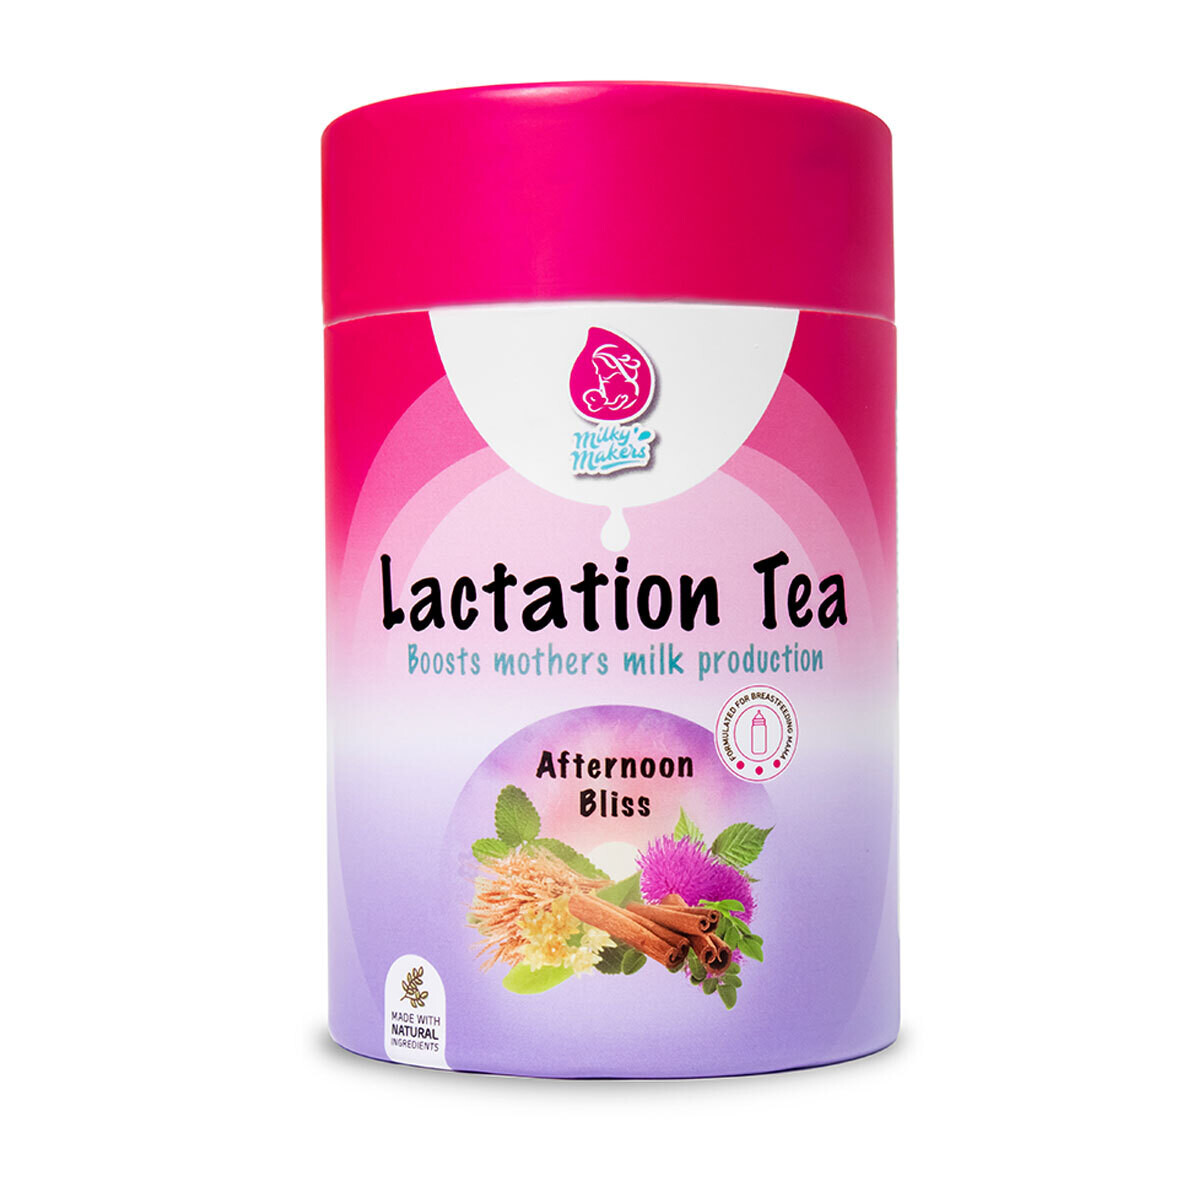 Afternoon Bliss Lactation Tea